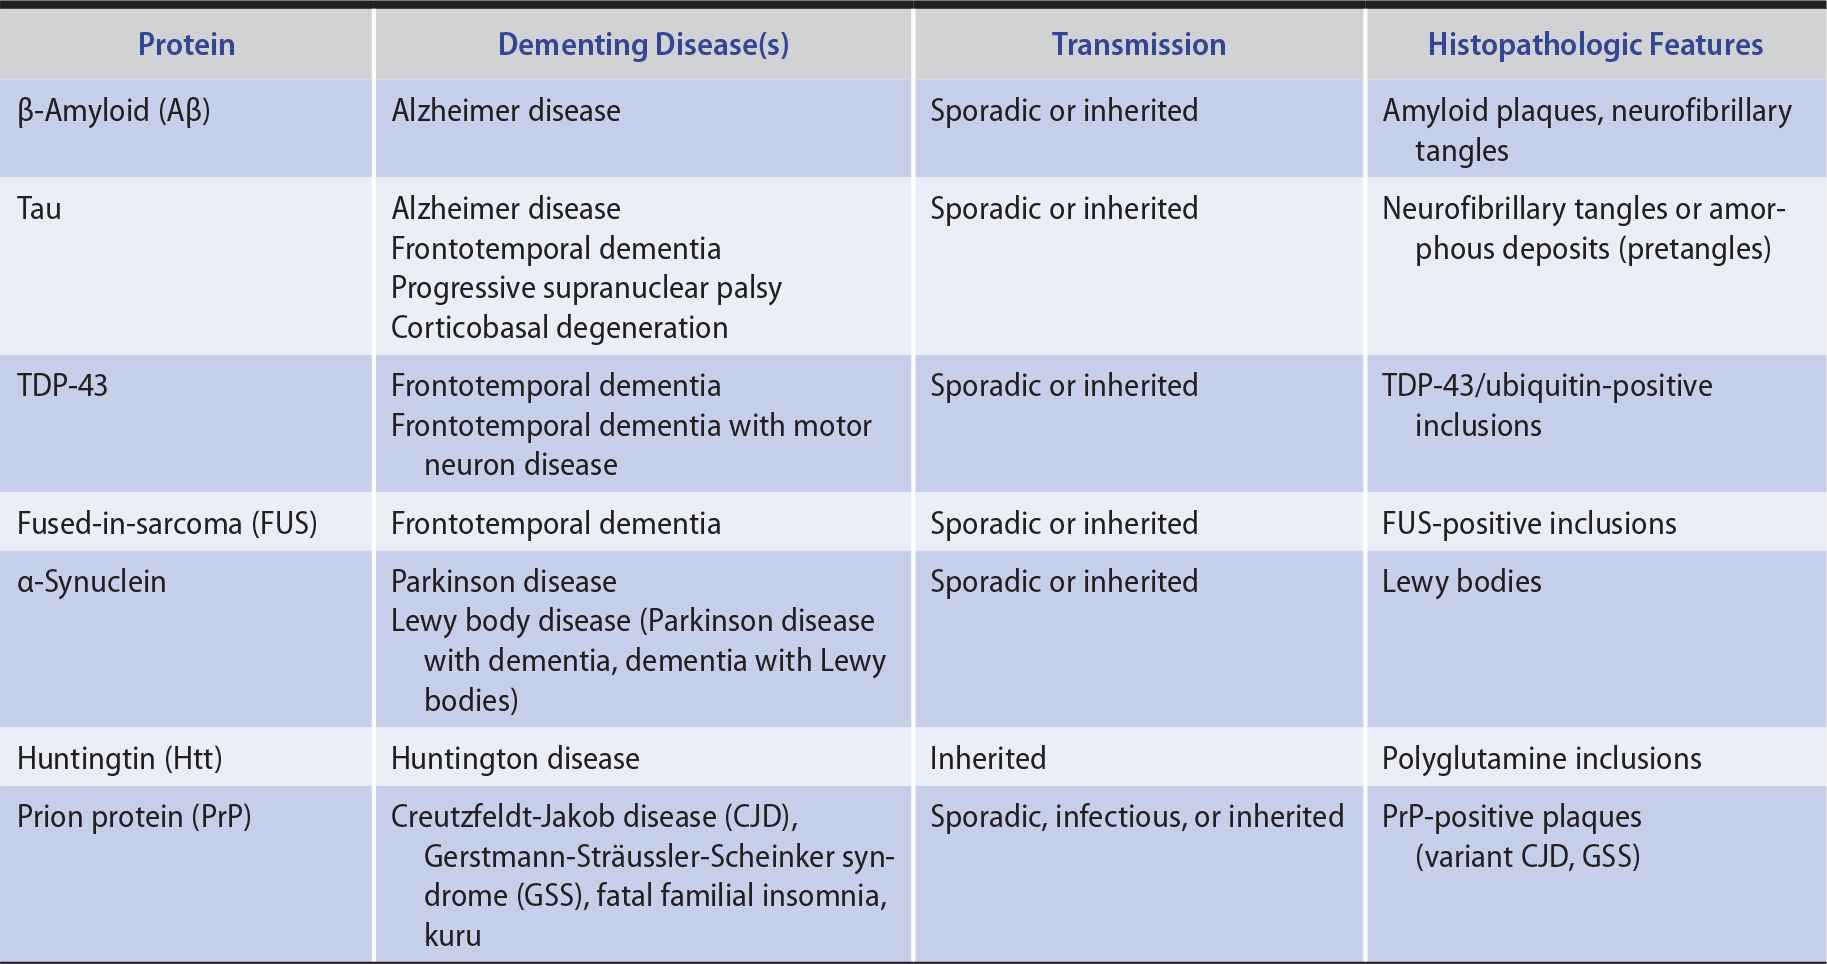 amnestic disorder vs dementia